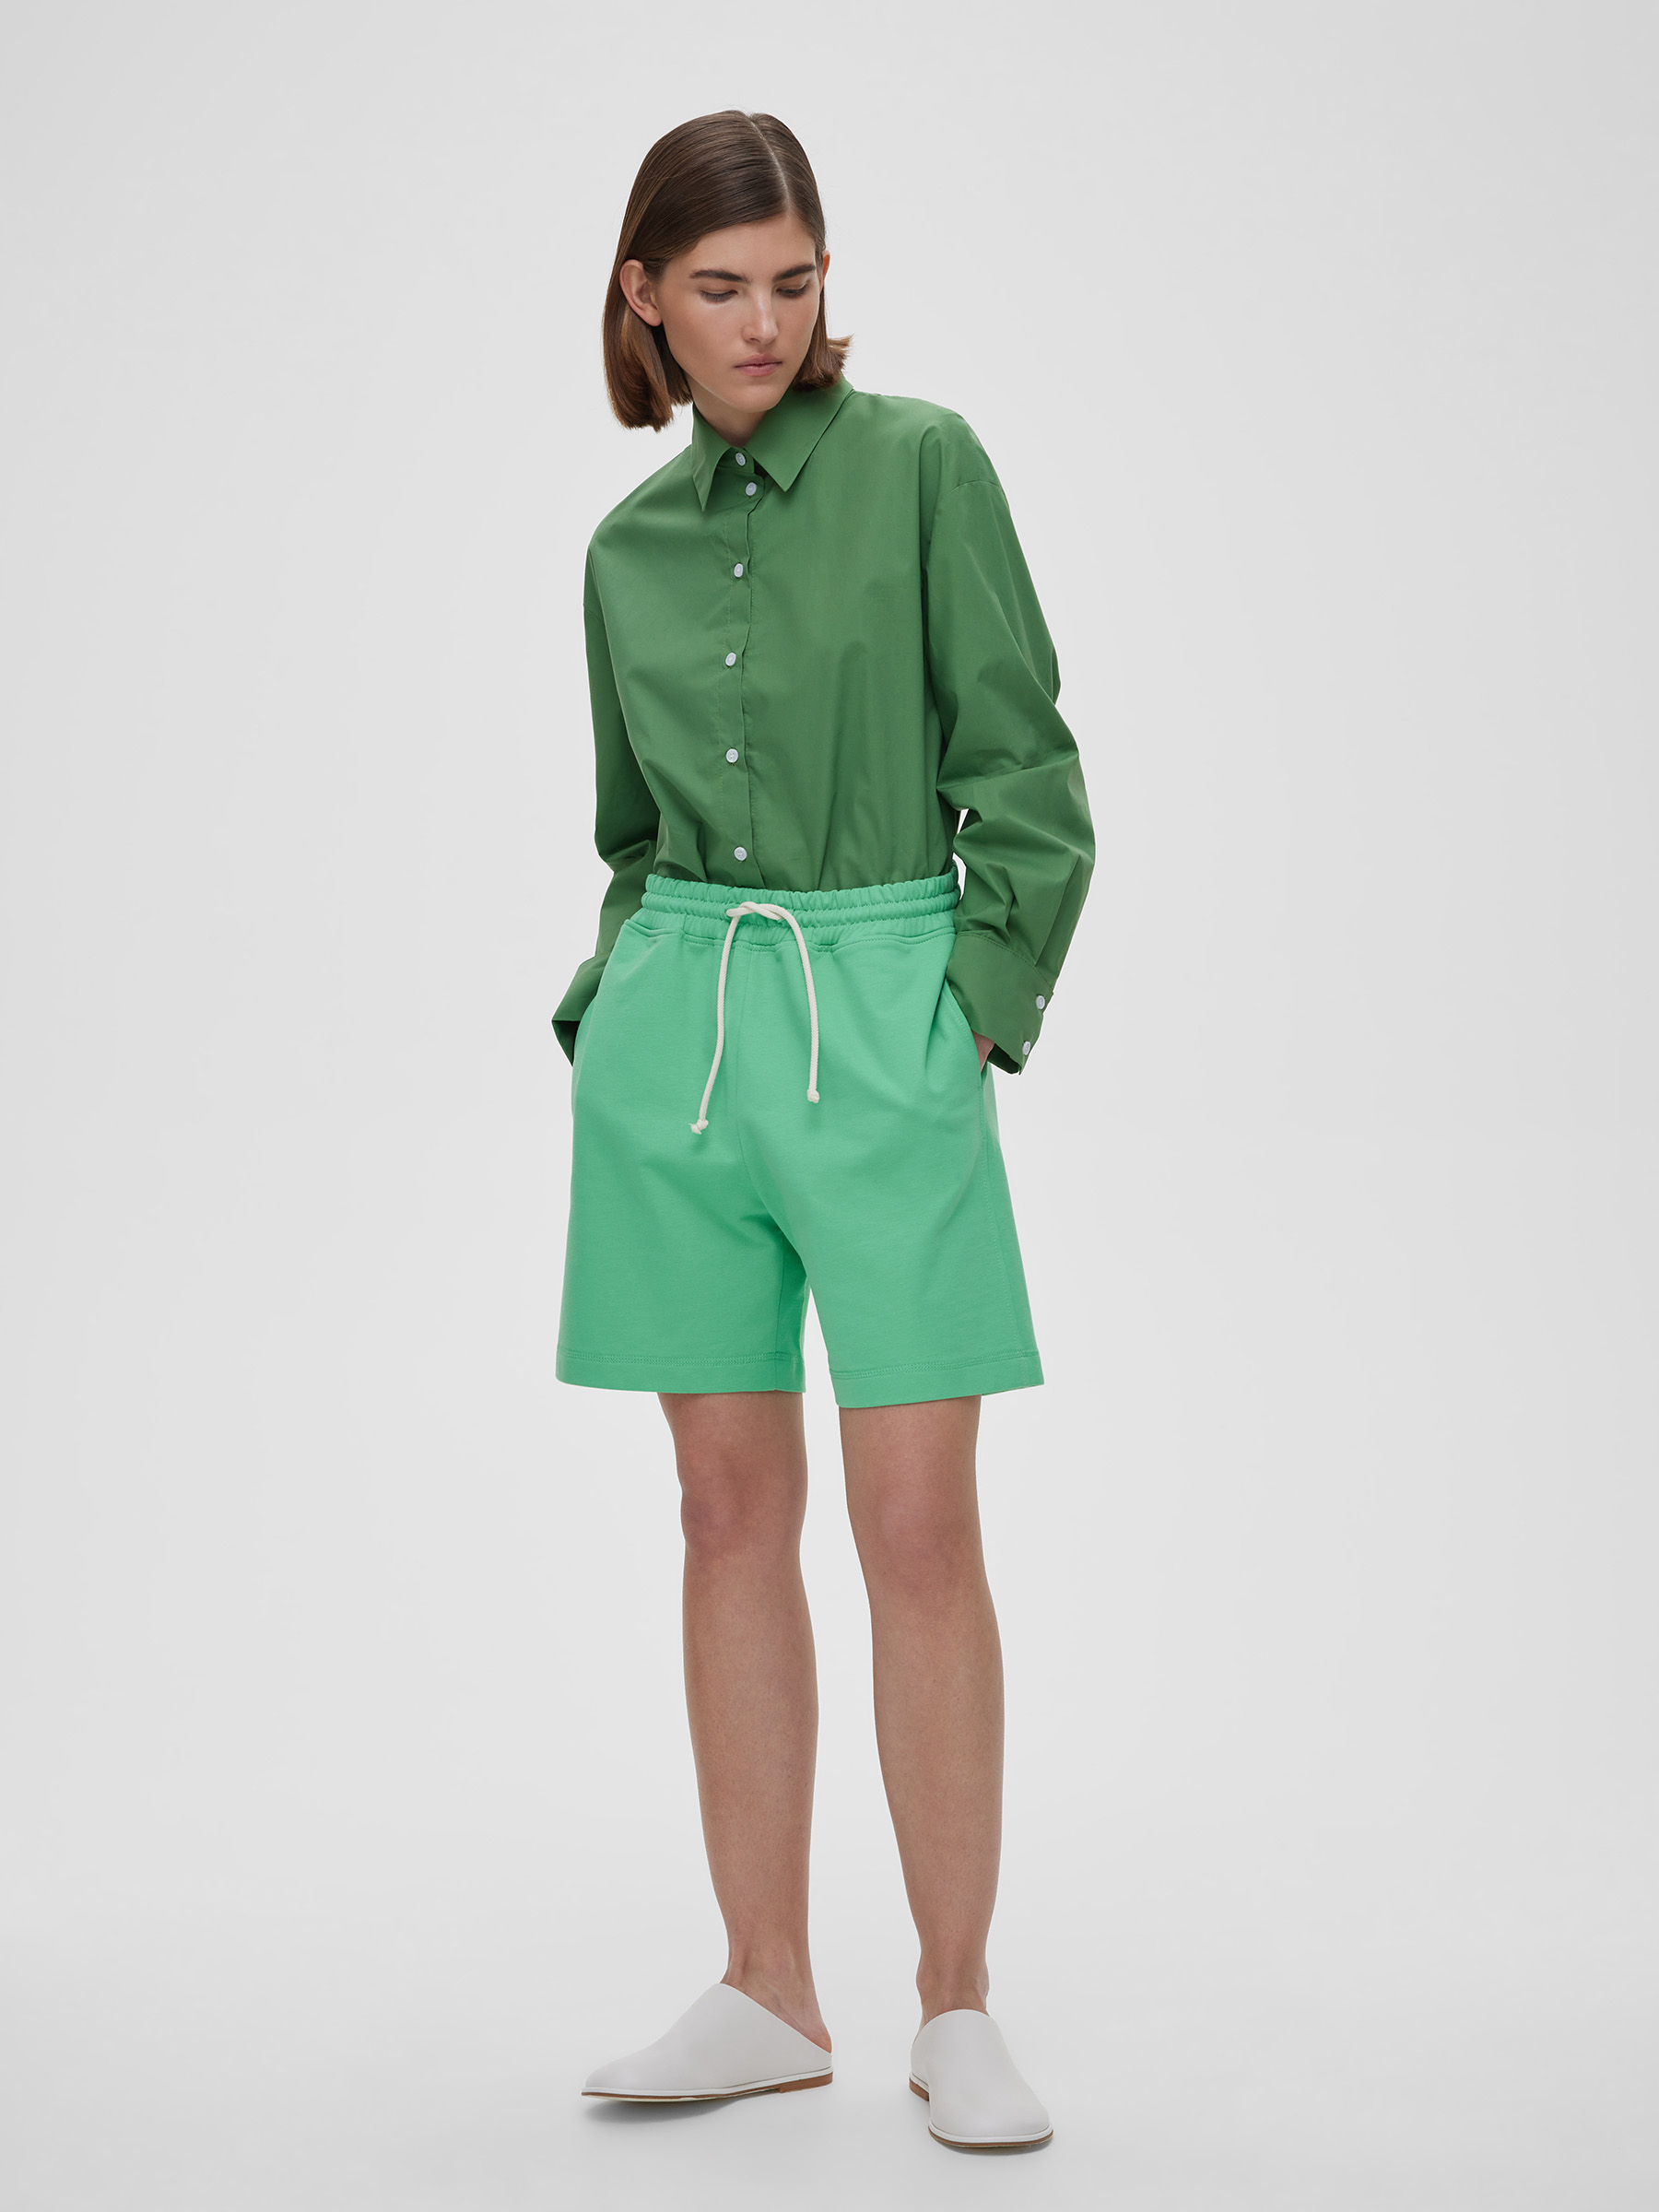 Шорты женские из футера, цвет – зеленый шорты женские из футера цвет – зеленый